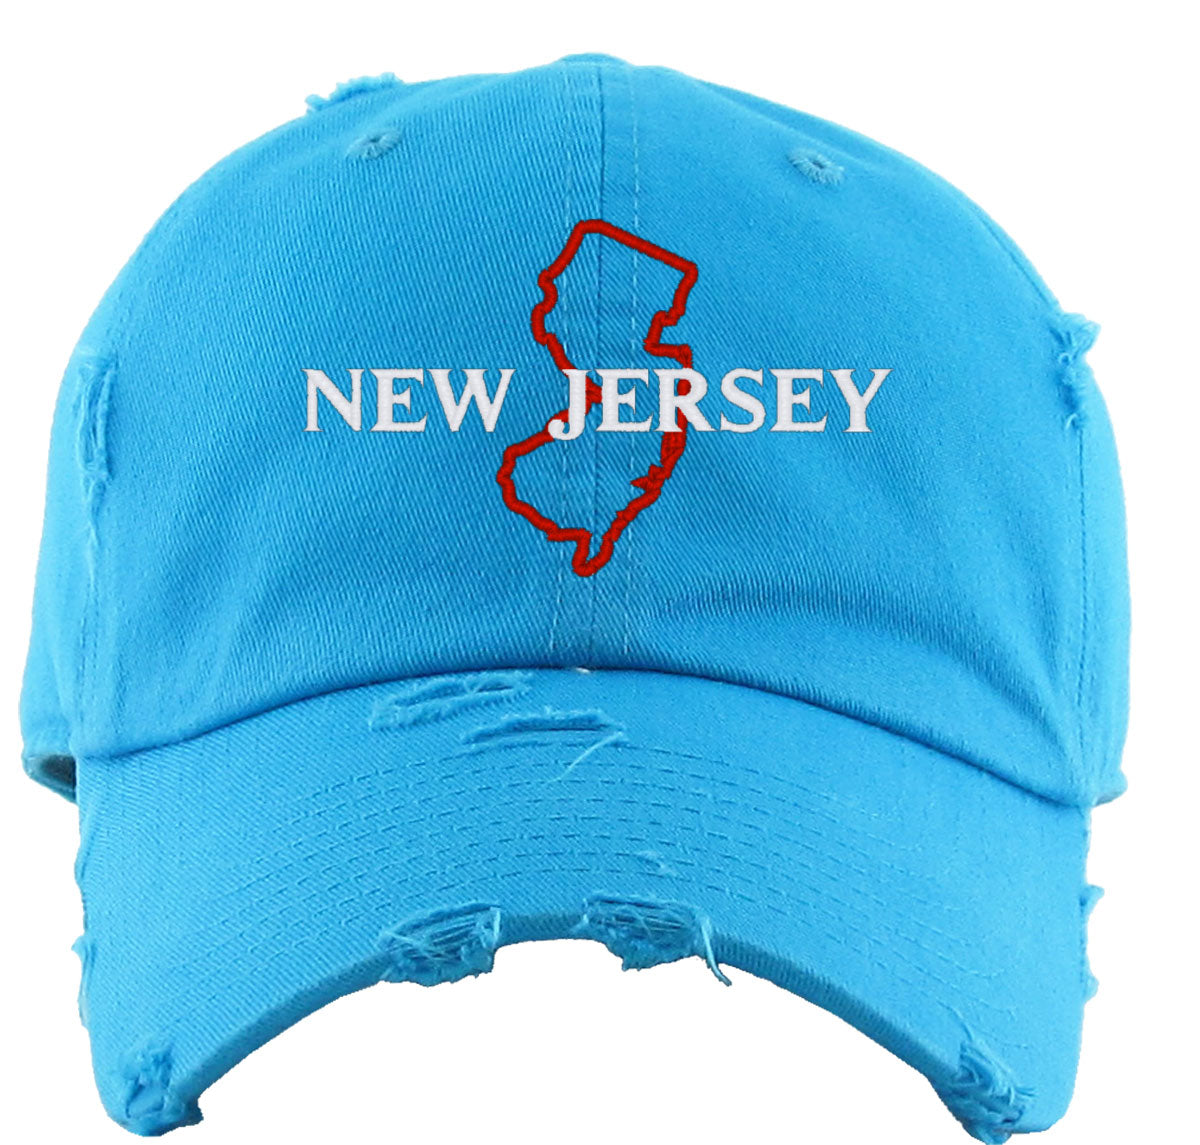 New Jersey Vintage Baseball Cap